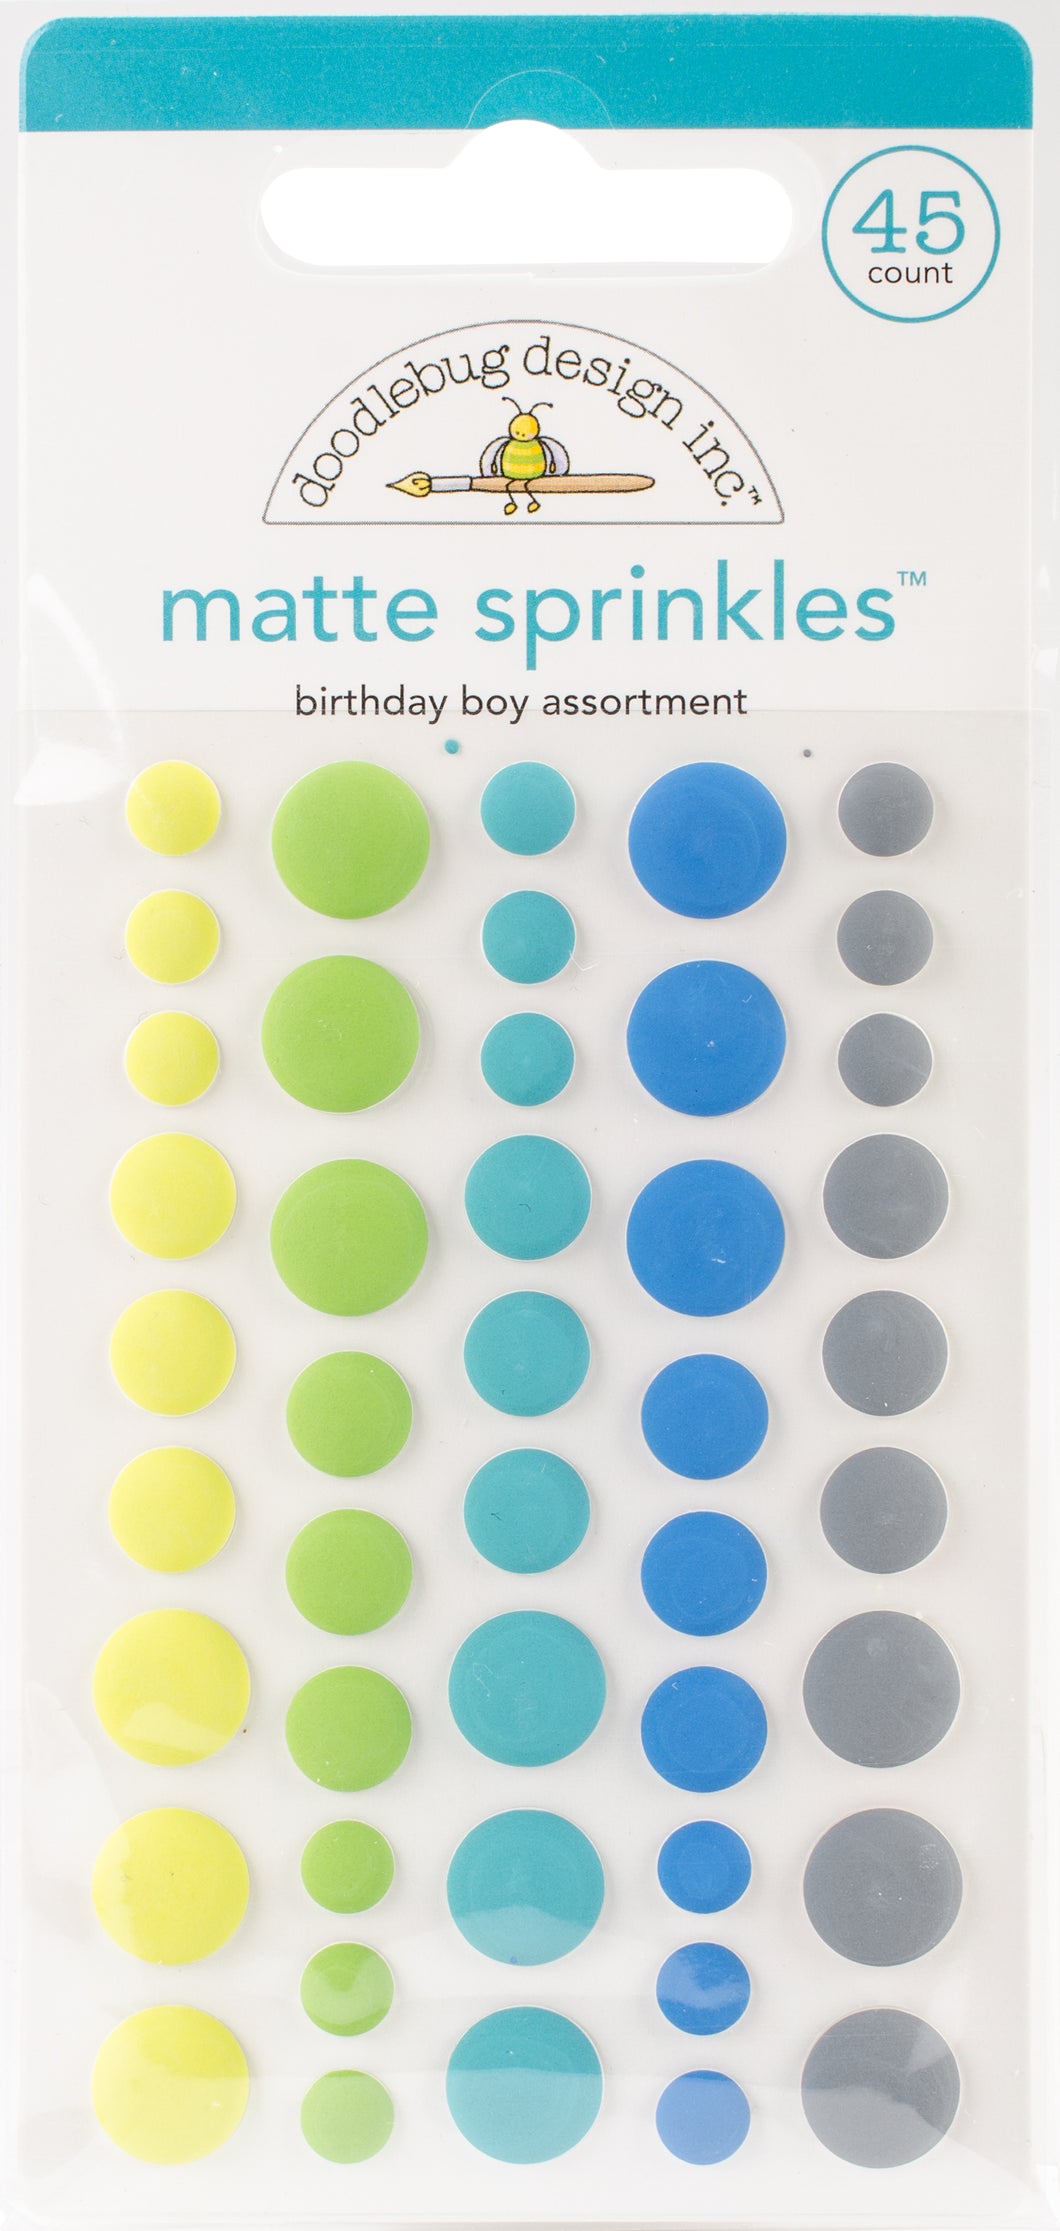 Doodlebug Design: Matte Sprinkles - Birthday Boy Assortment